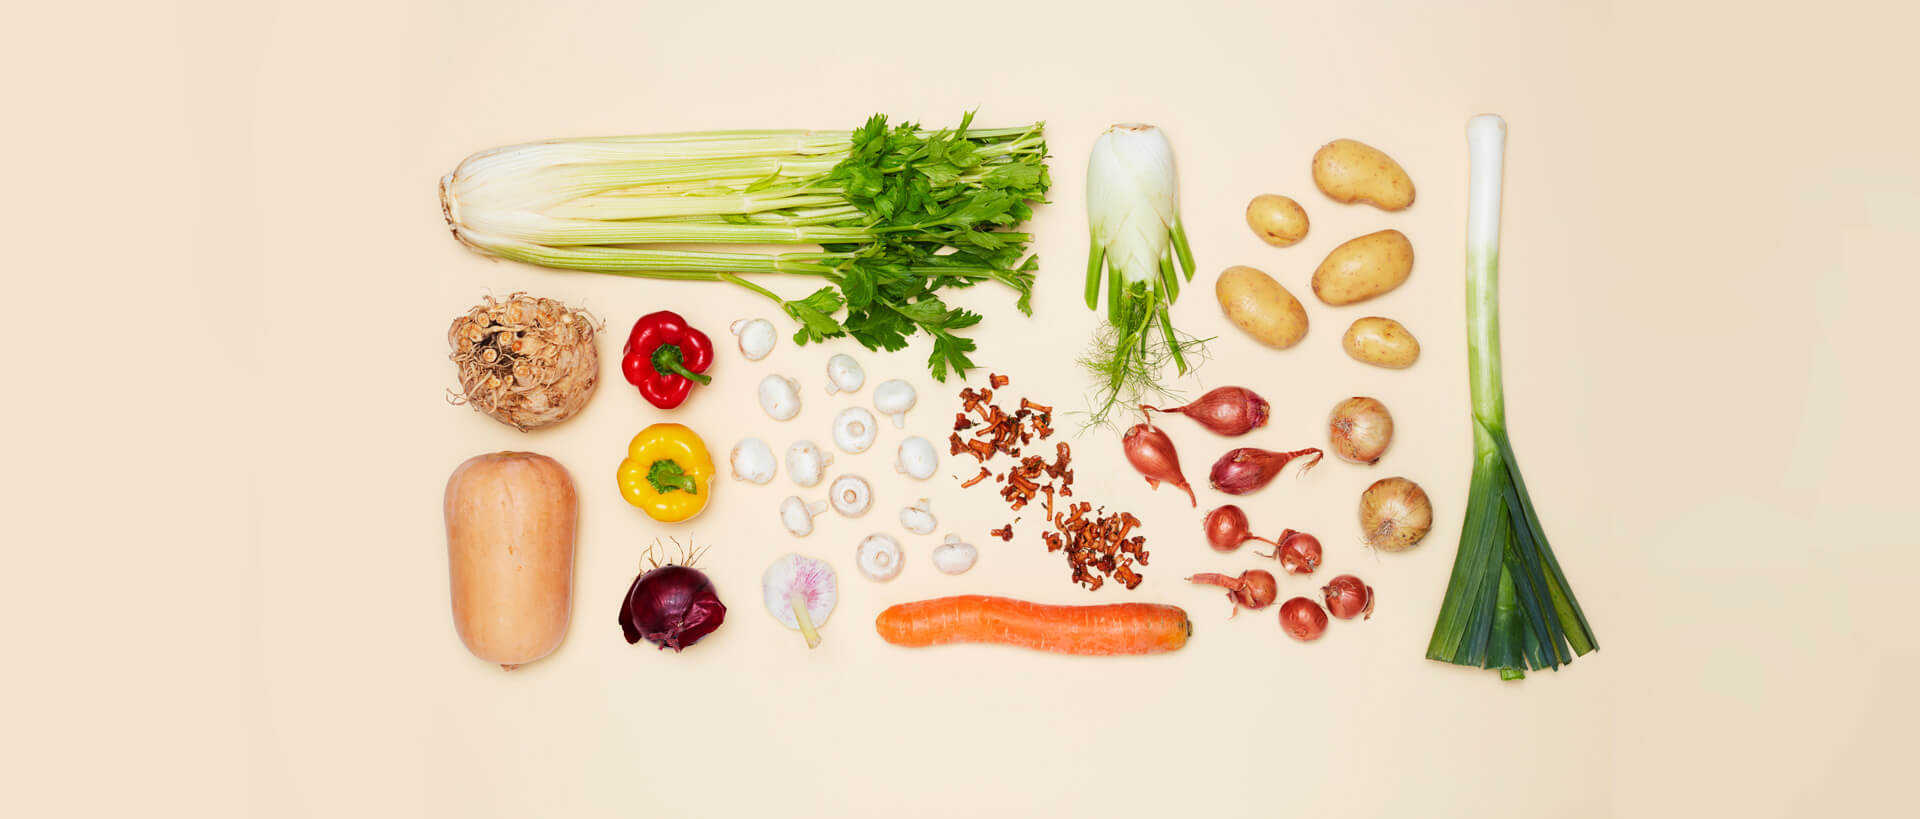 Leffe - food photography by Erik de Koning - main ingredients vegetables